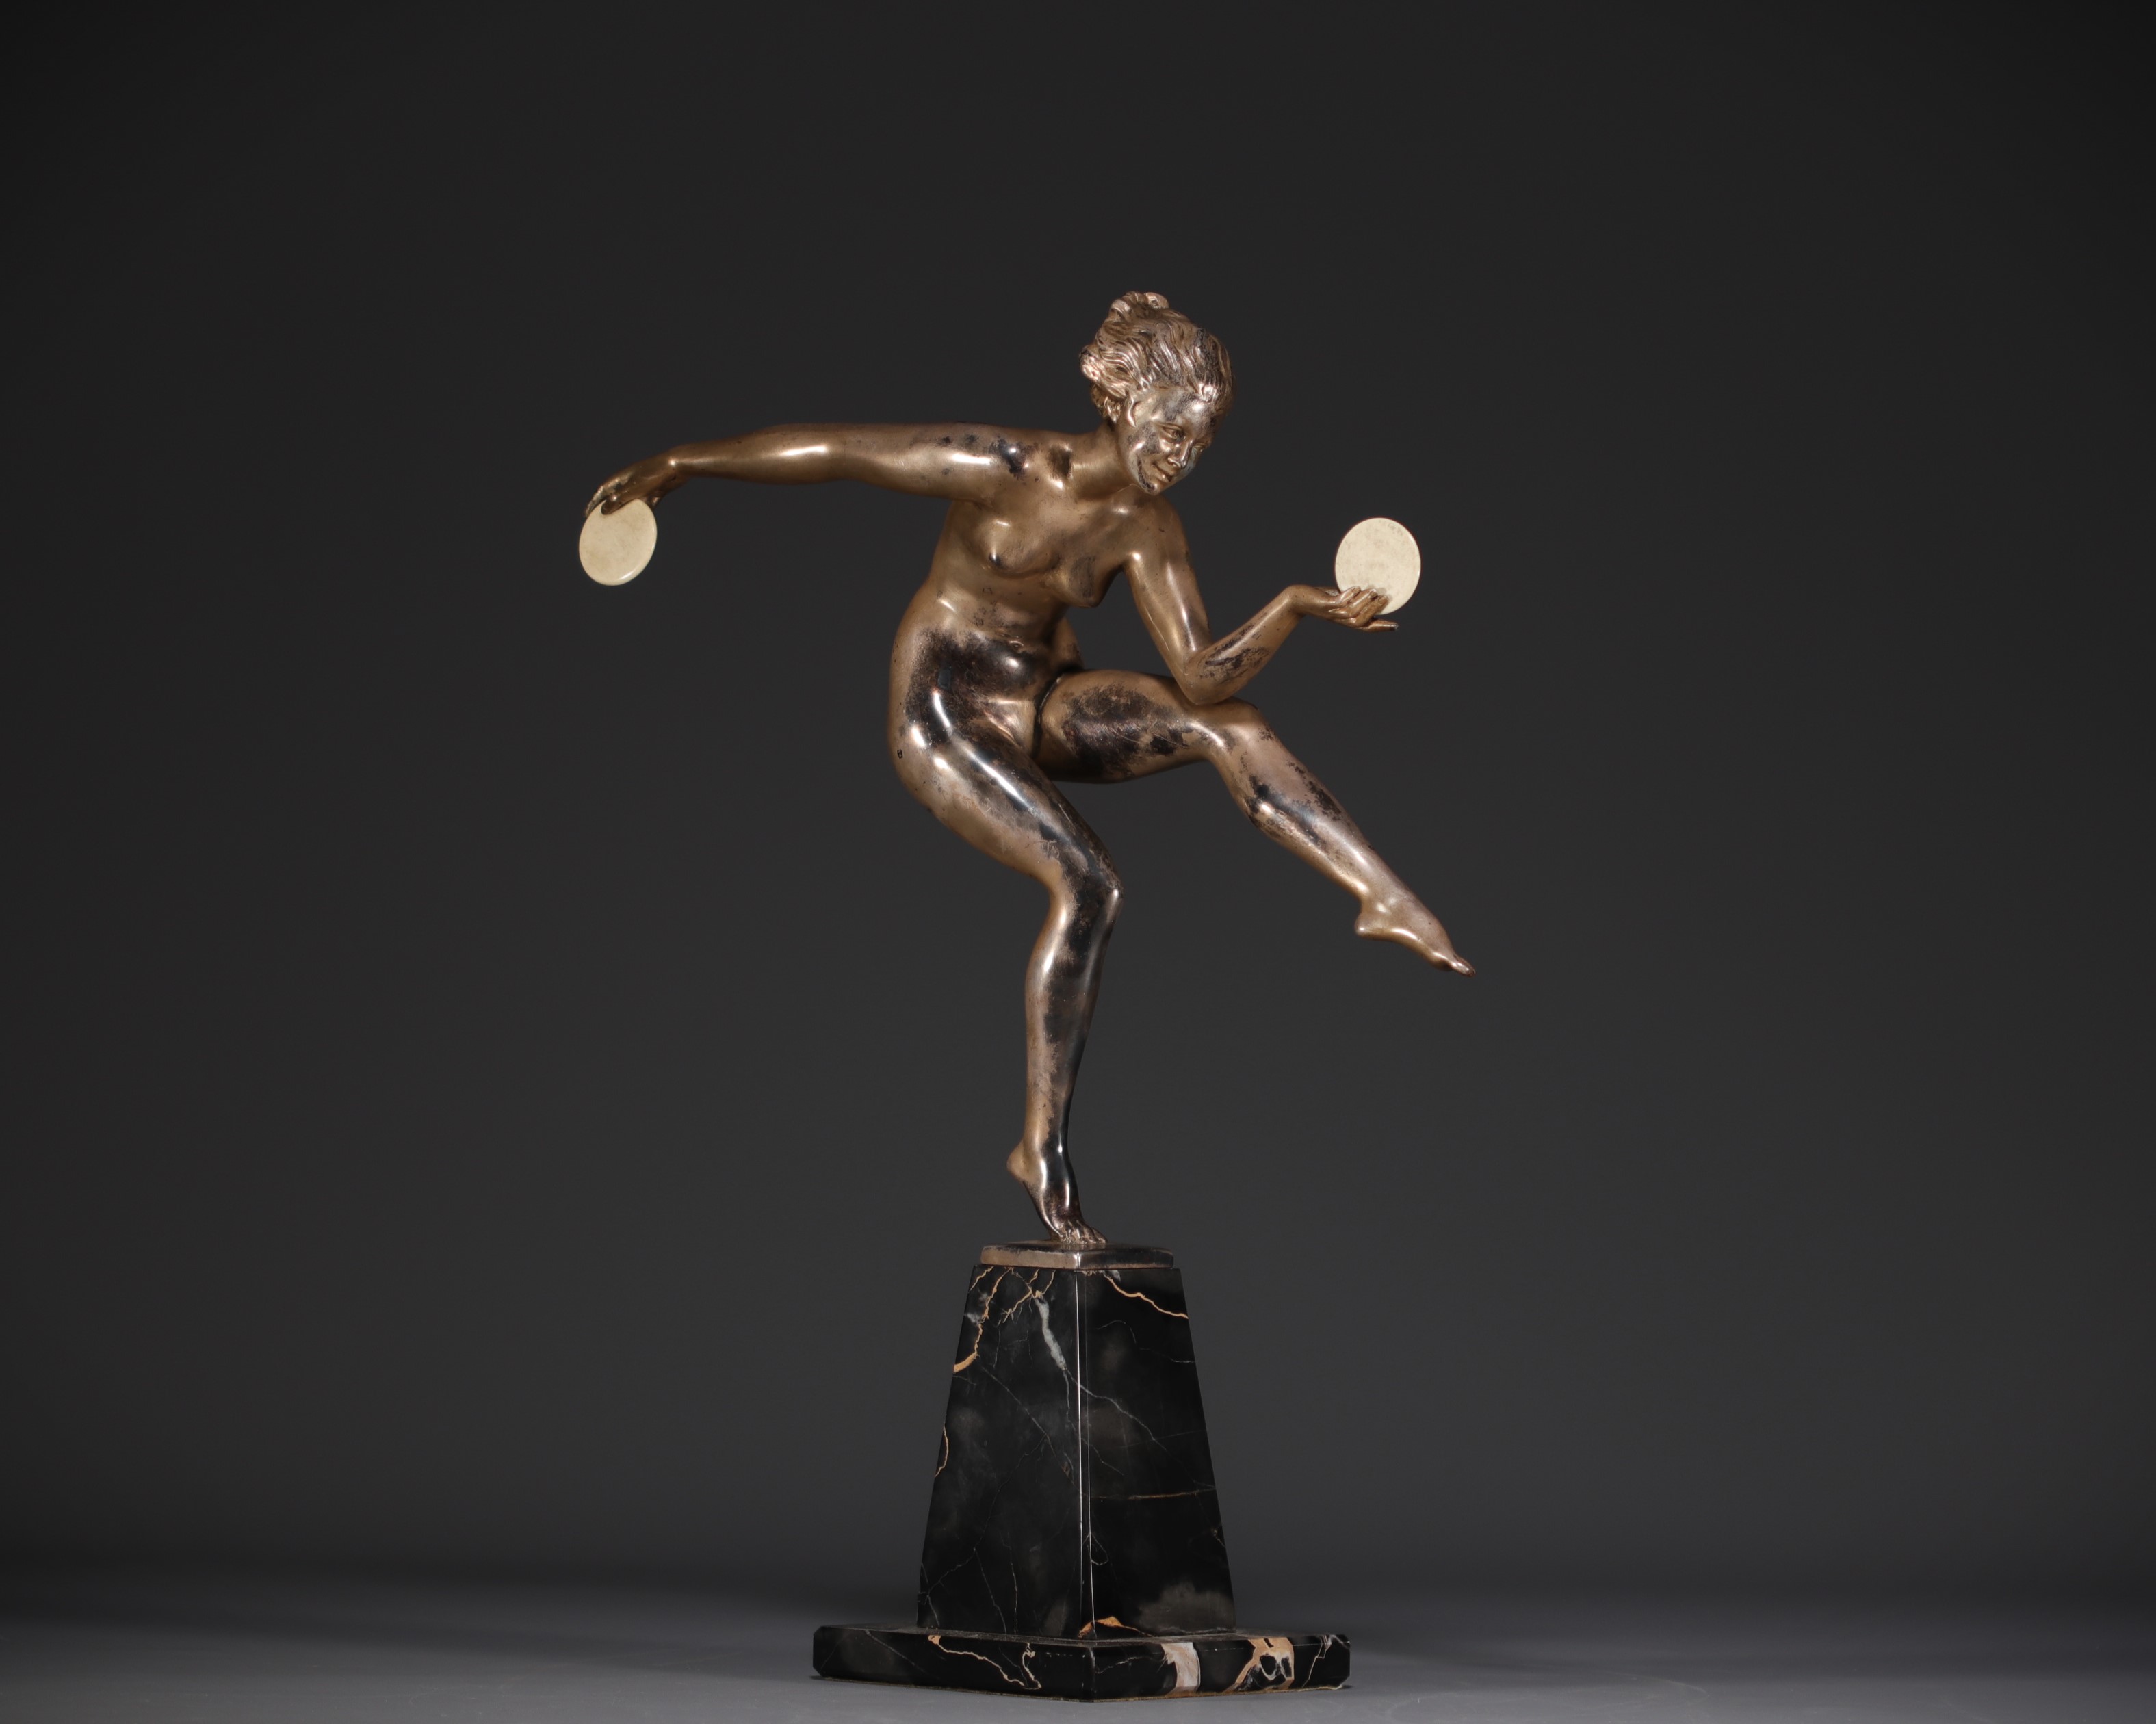 Marcel DERENNE (1886-1948) for Max Le Verrier - "Danseuse aux disques", an imposing sculpture in sil